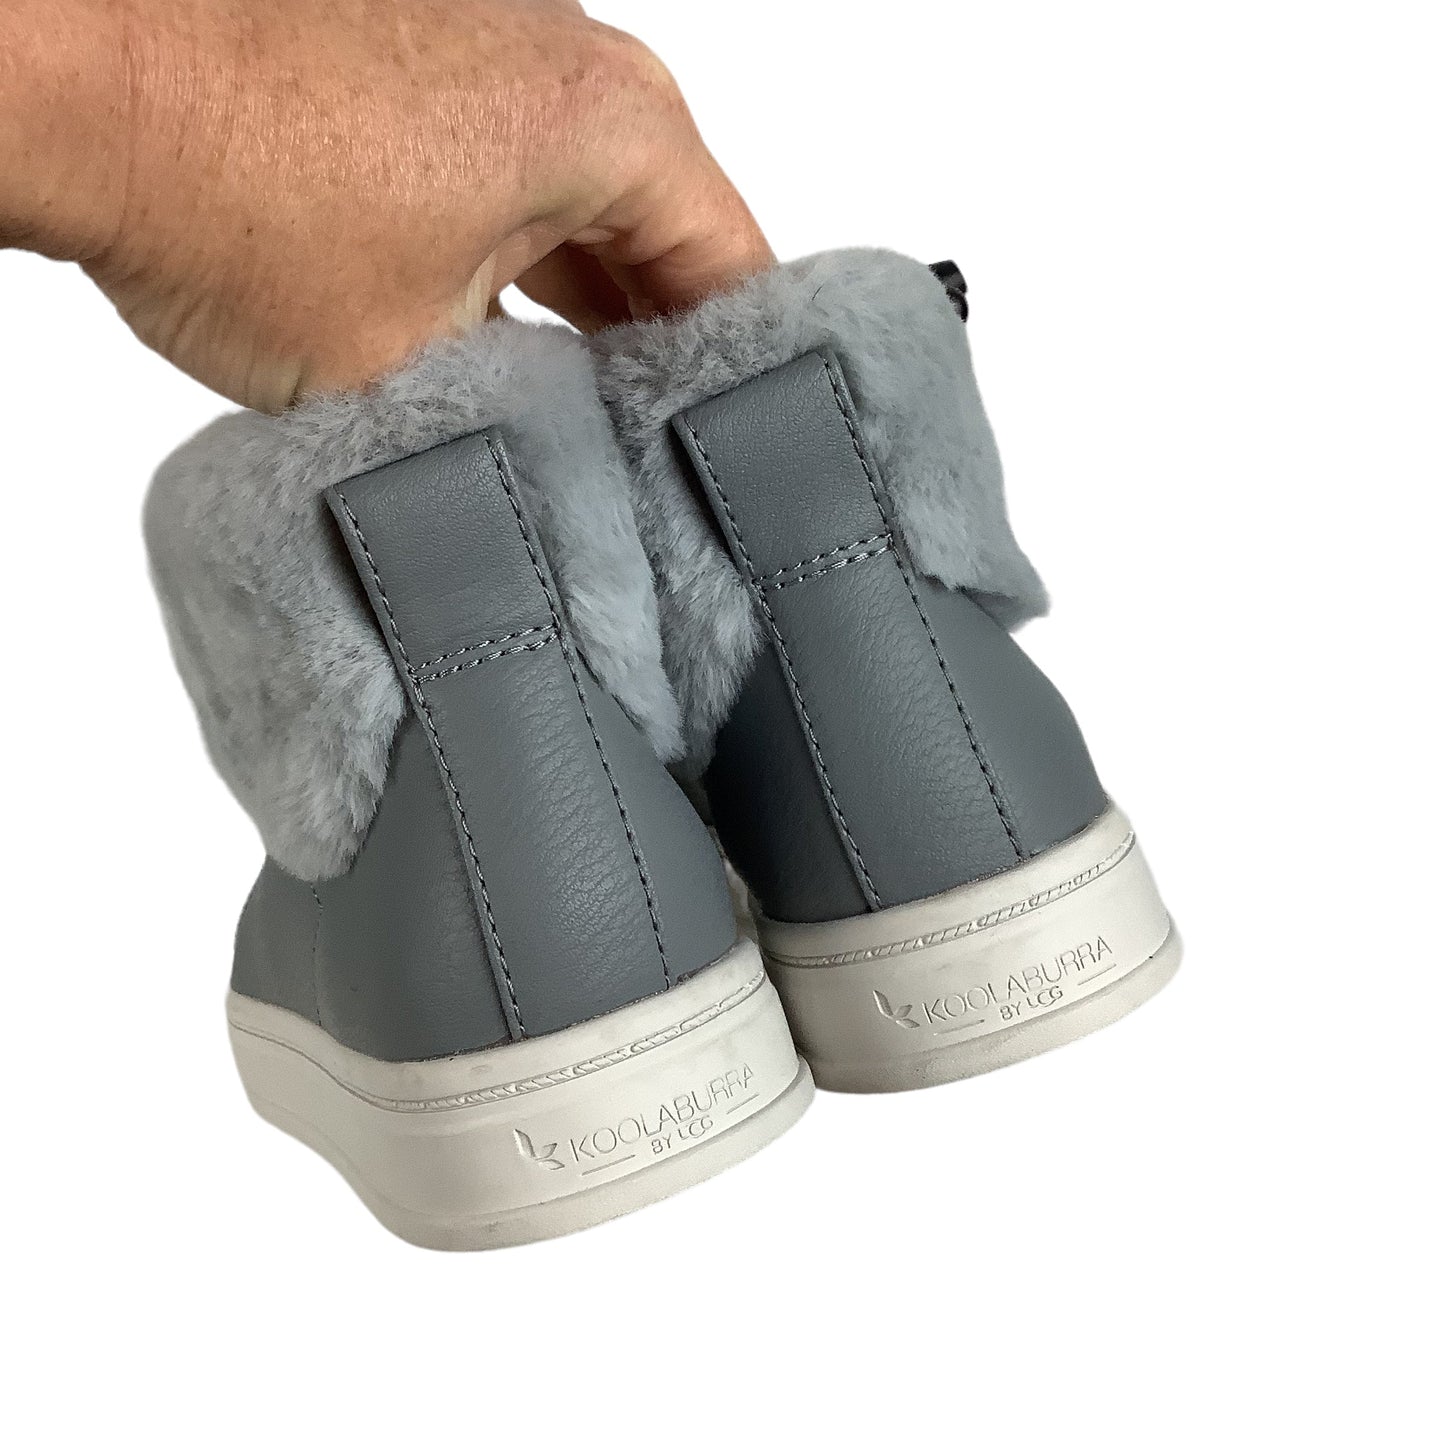 Grey Shoes Flats Koolaburra By Ugg, Size 7